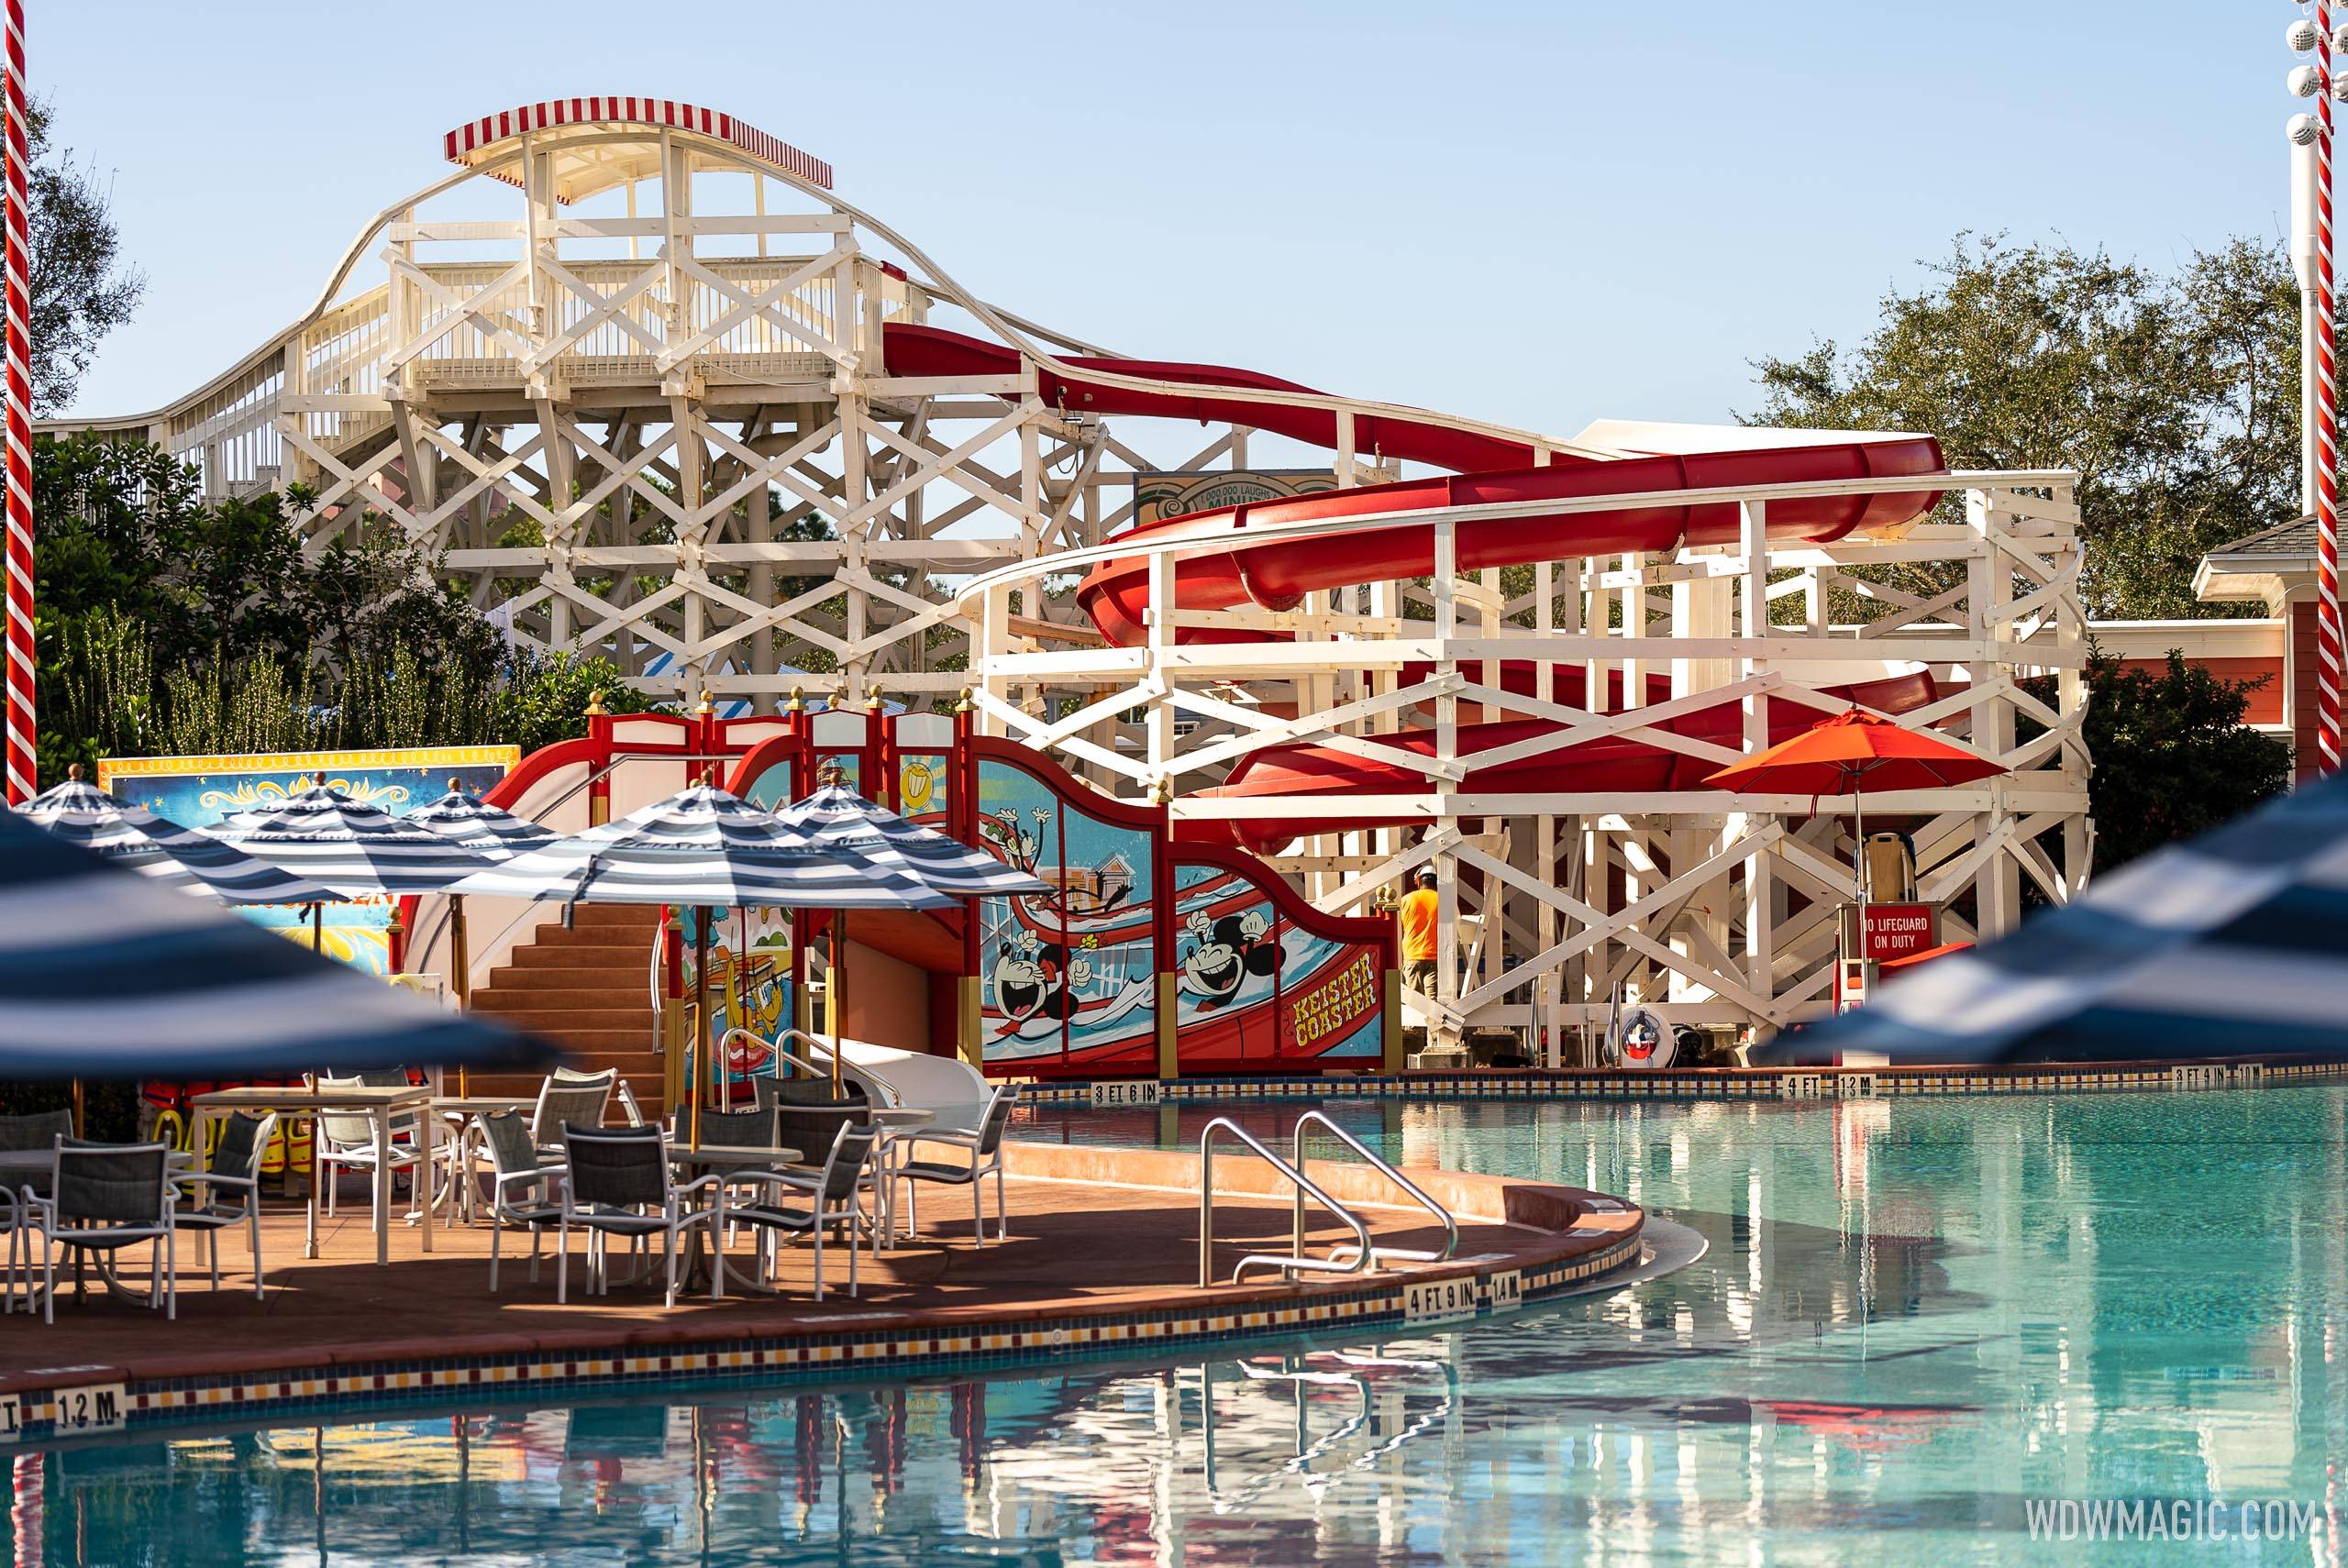 Luna Park Pool Slide now closed for refurbishment at Disney's BoardWalk Inn